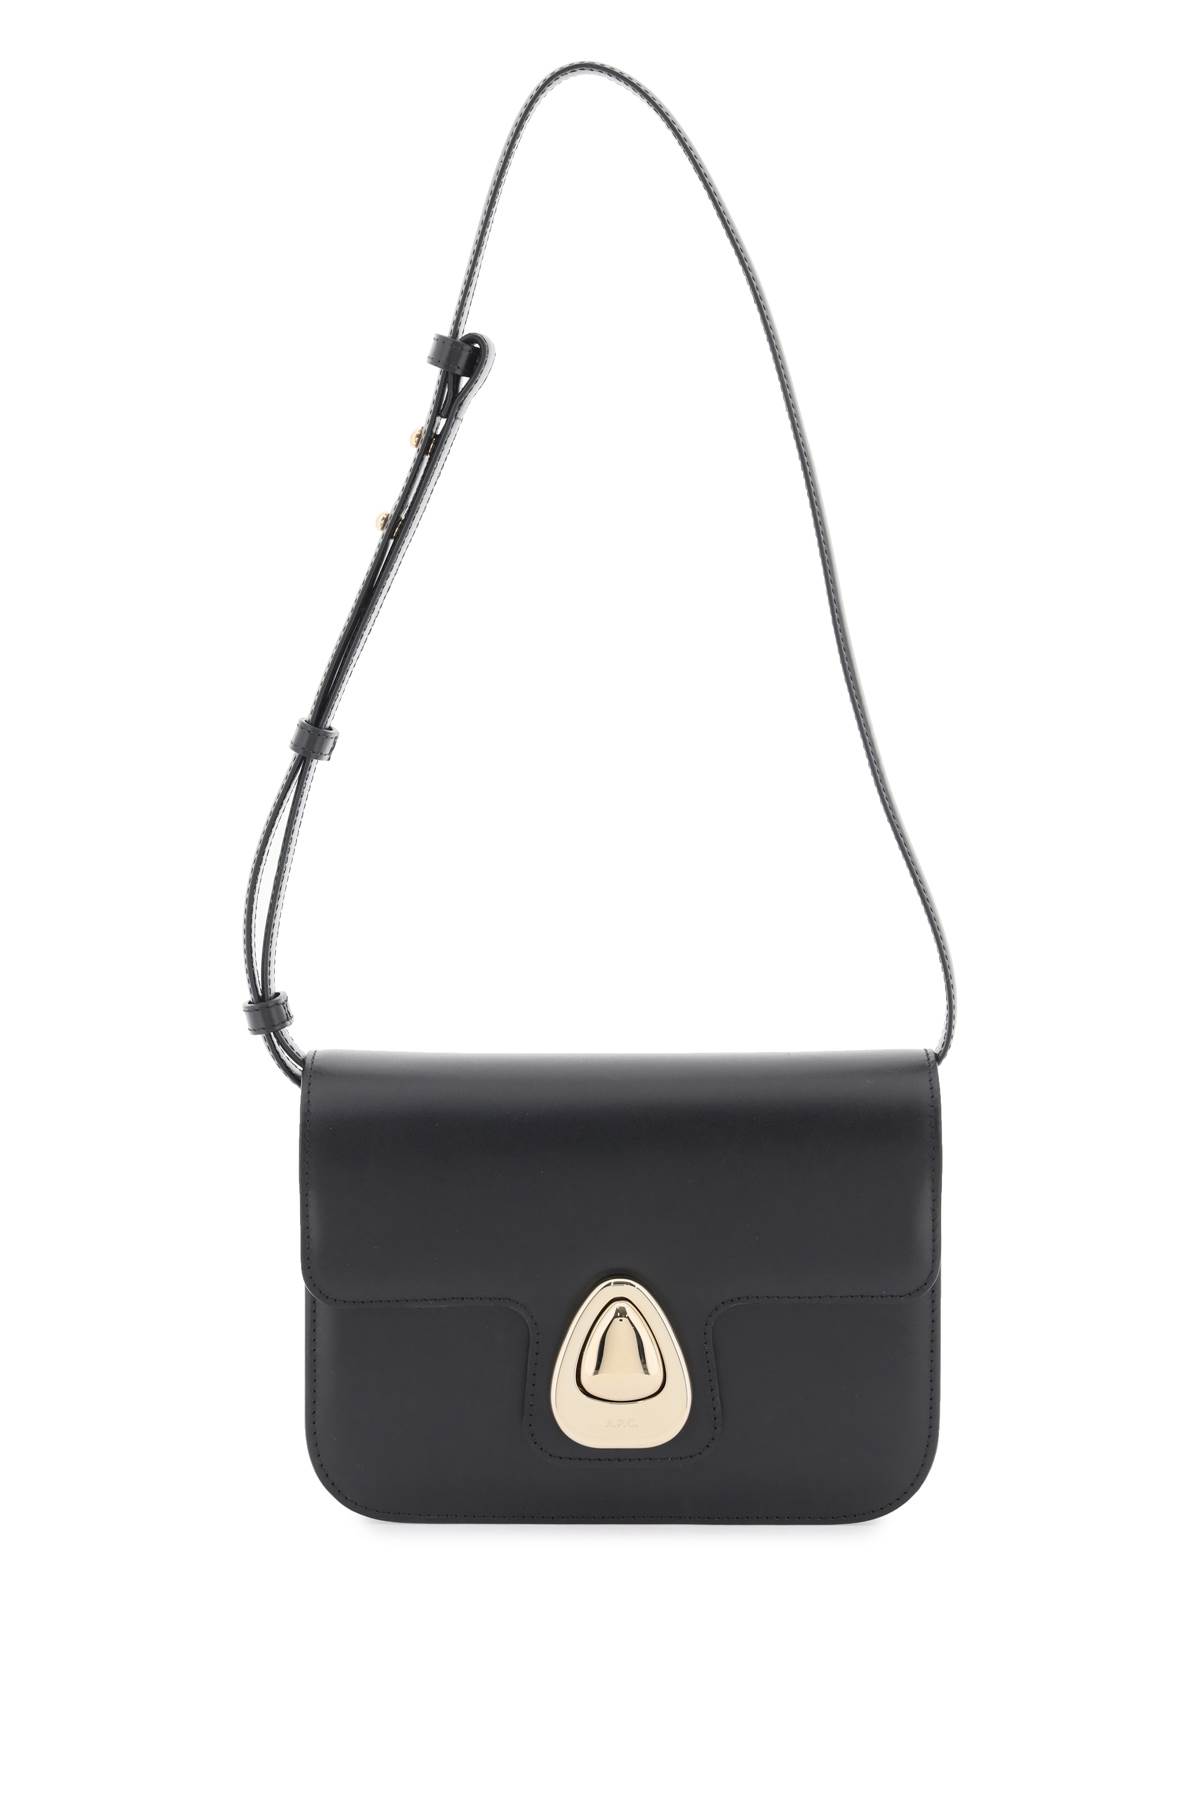 Apc Astra Small Bag In Noir (black)